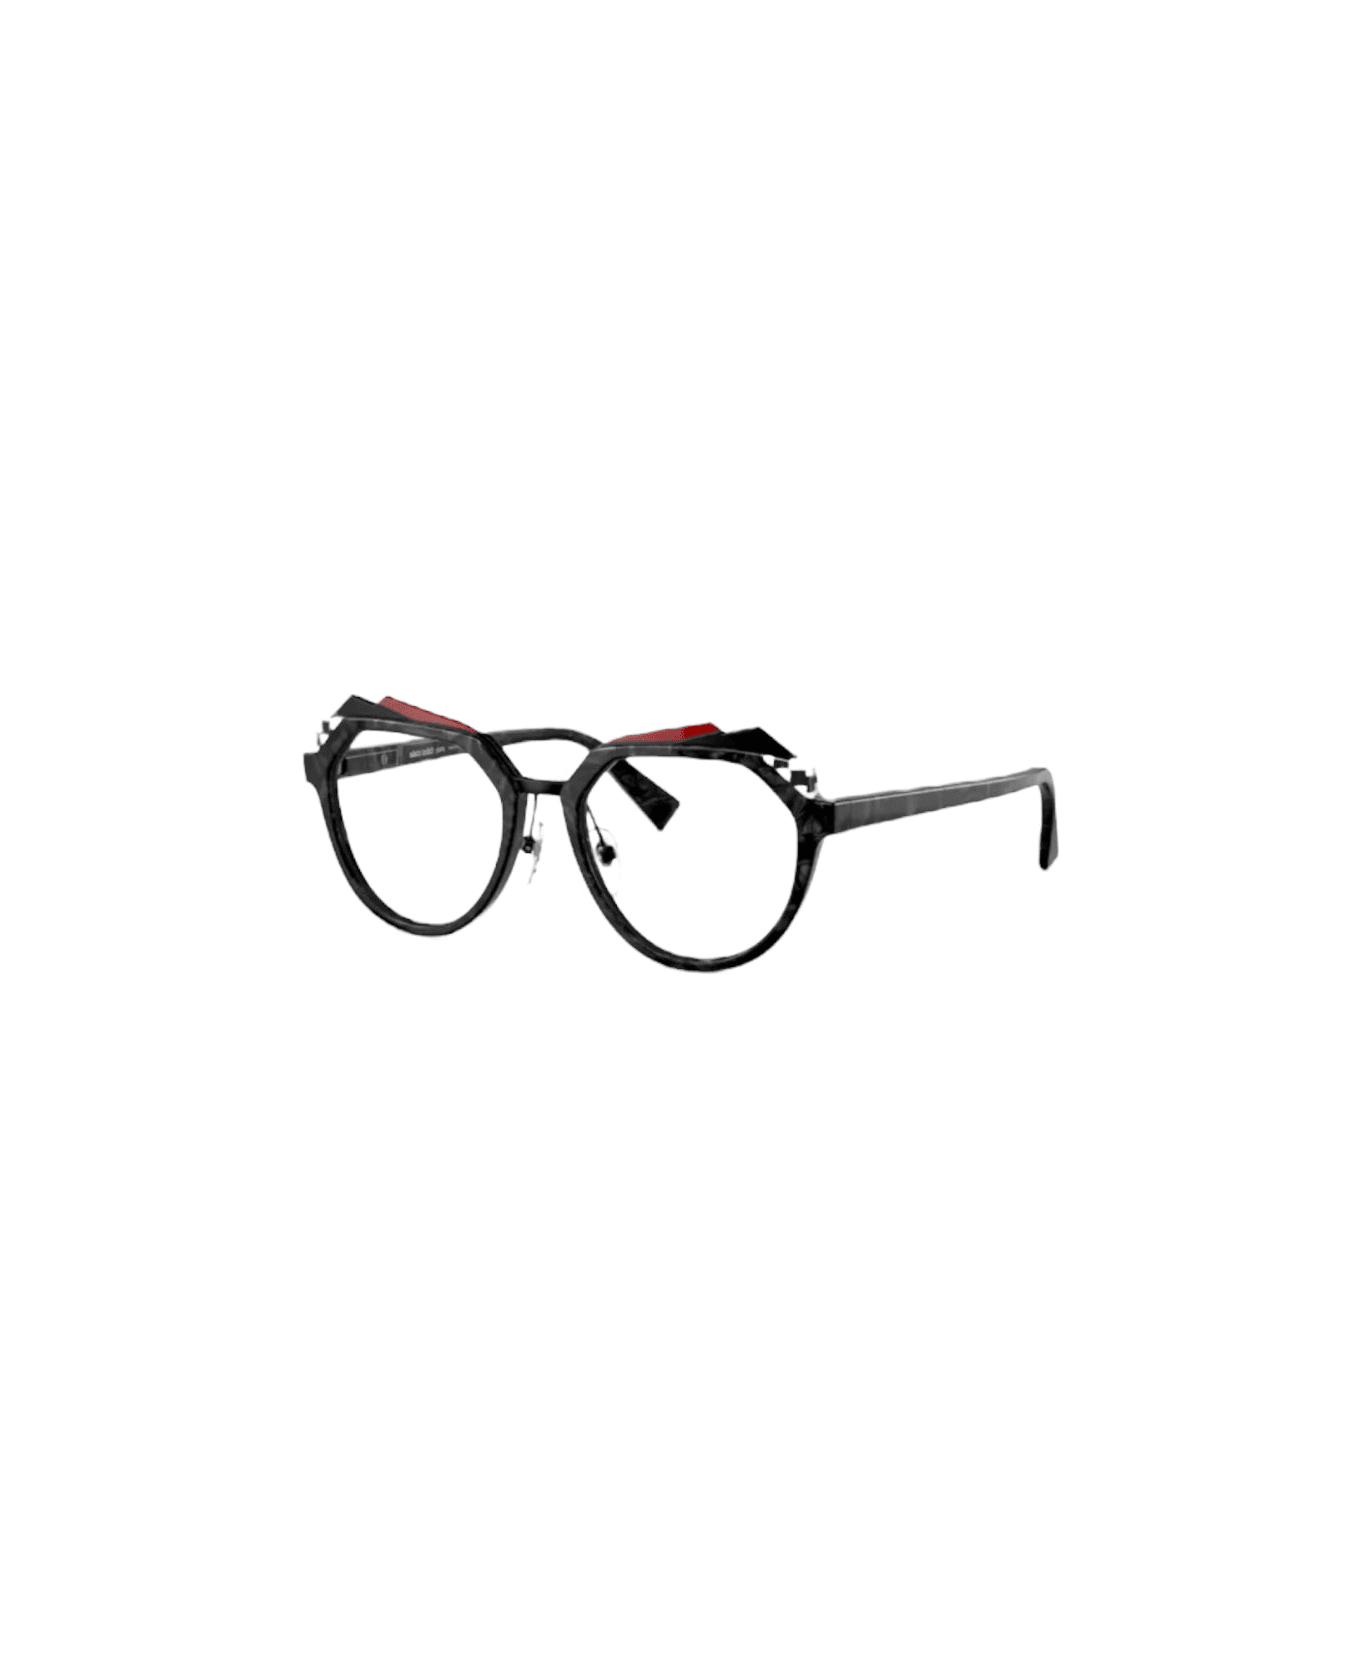 Alain Mikli Bellavista- 3144 - Black/red Glasses